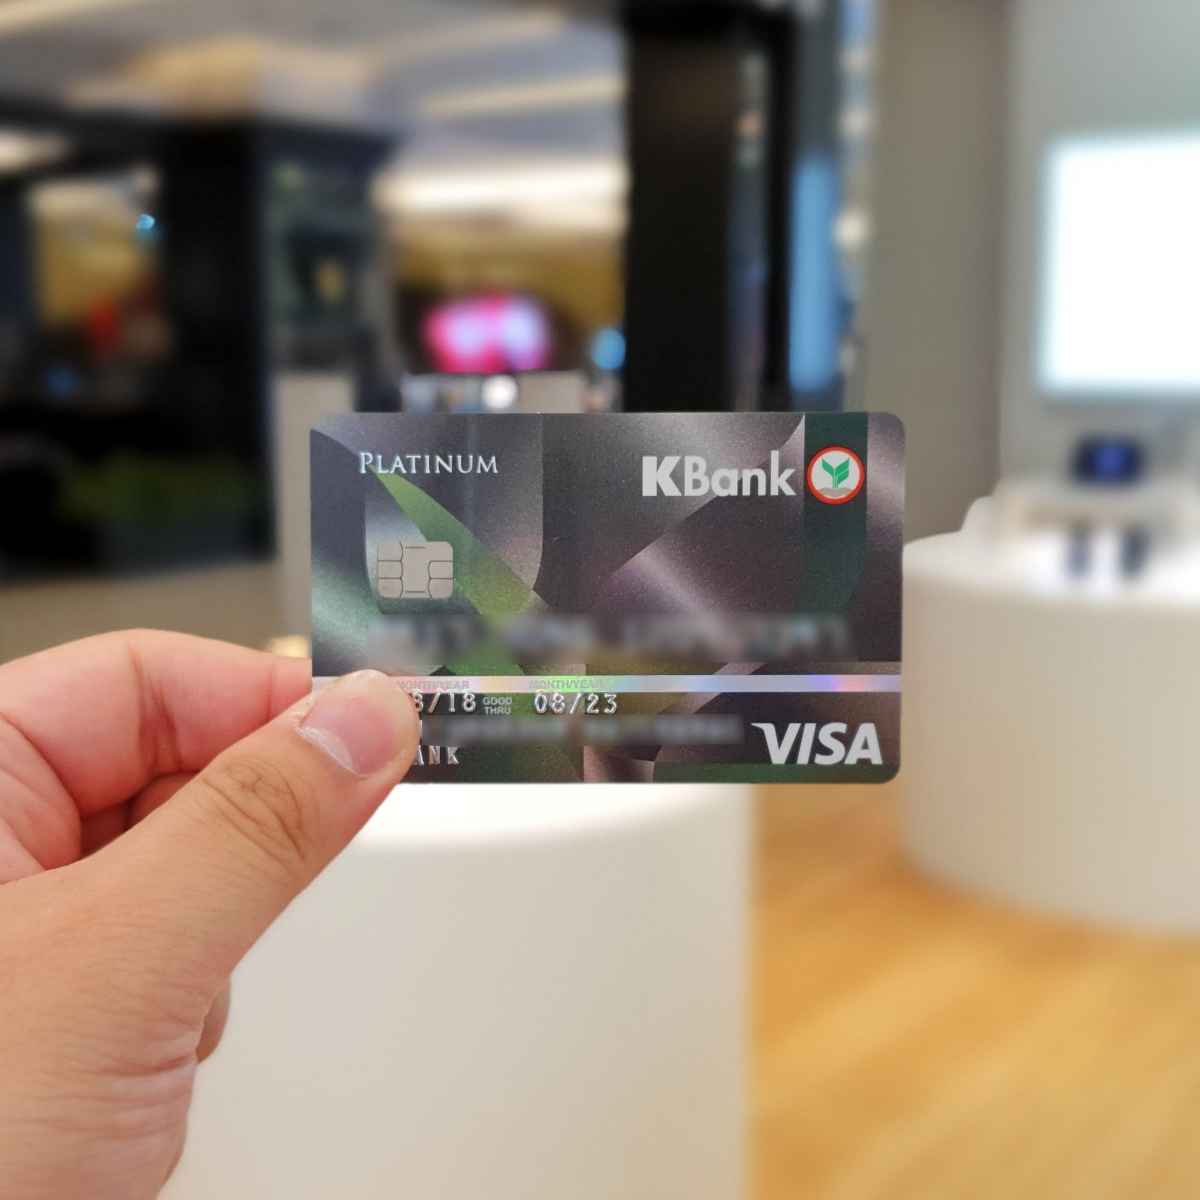 KBank Credit Card